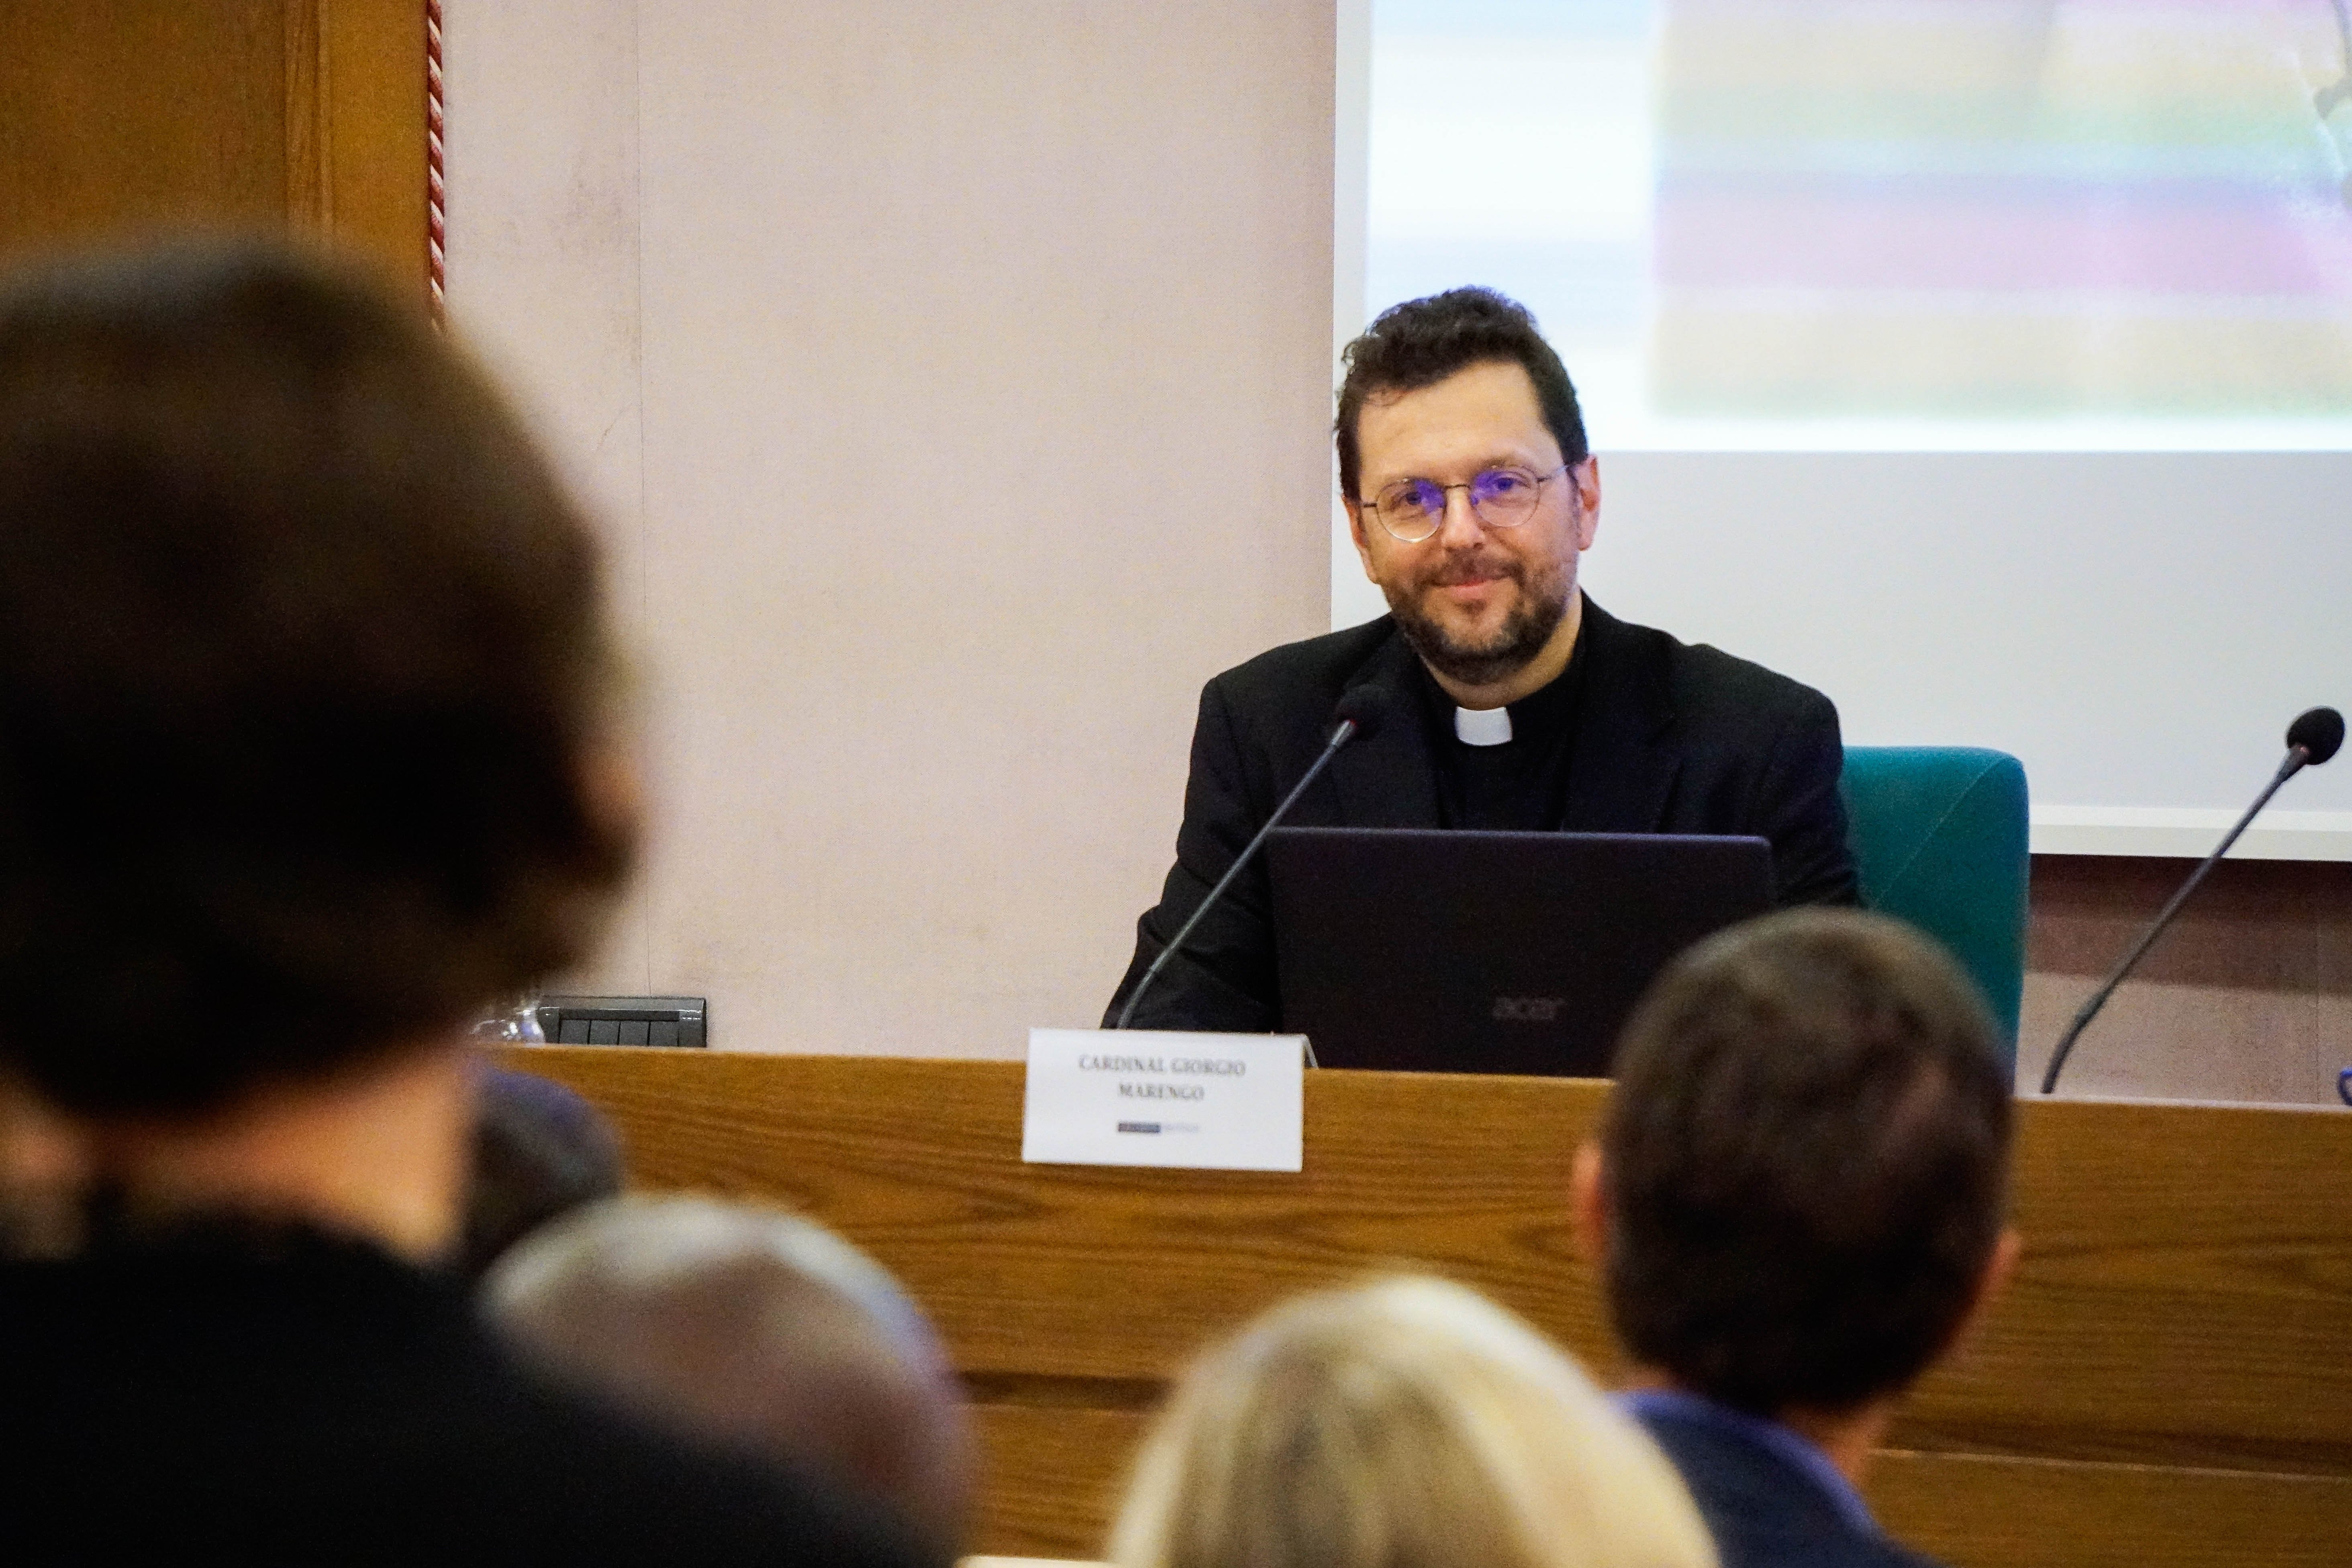 Cardinal Giorgio Marengo listens to a question at a conference.